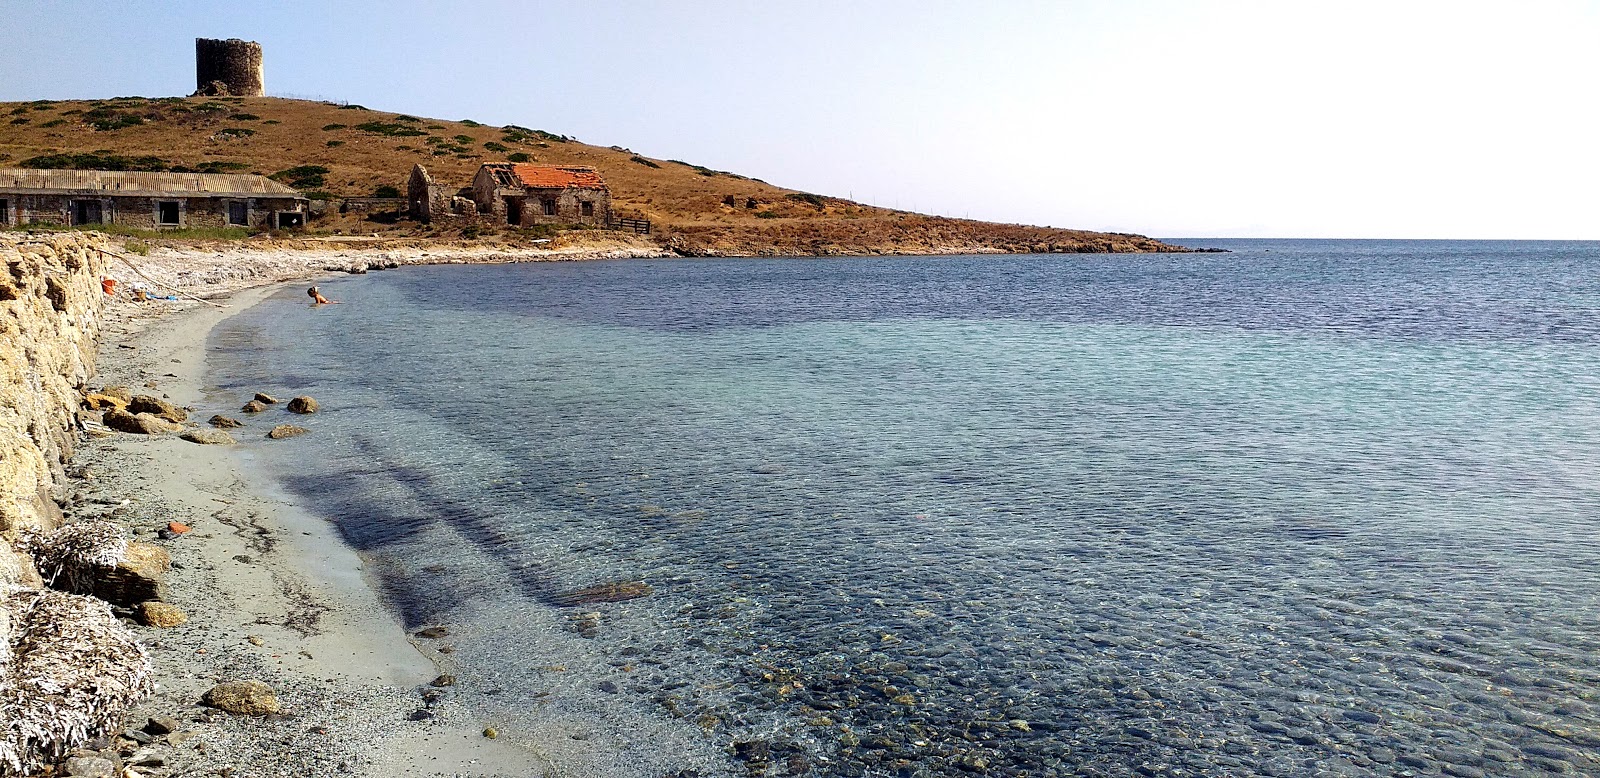 Photo of Spiaggia di Cala Trabuccato and the settlement